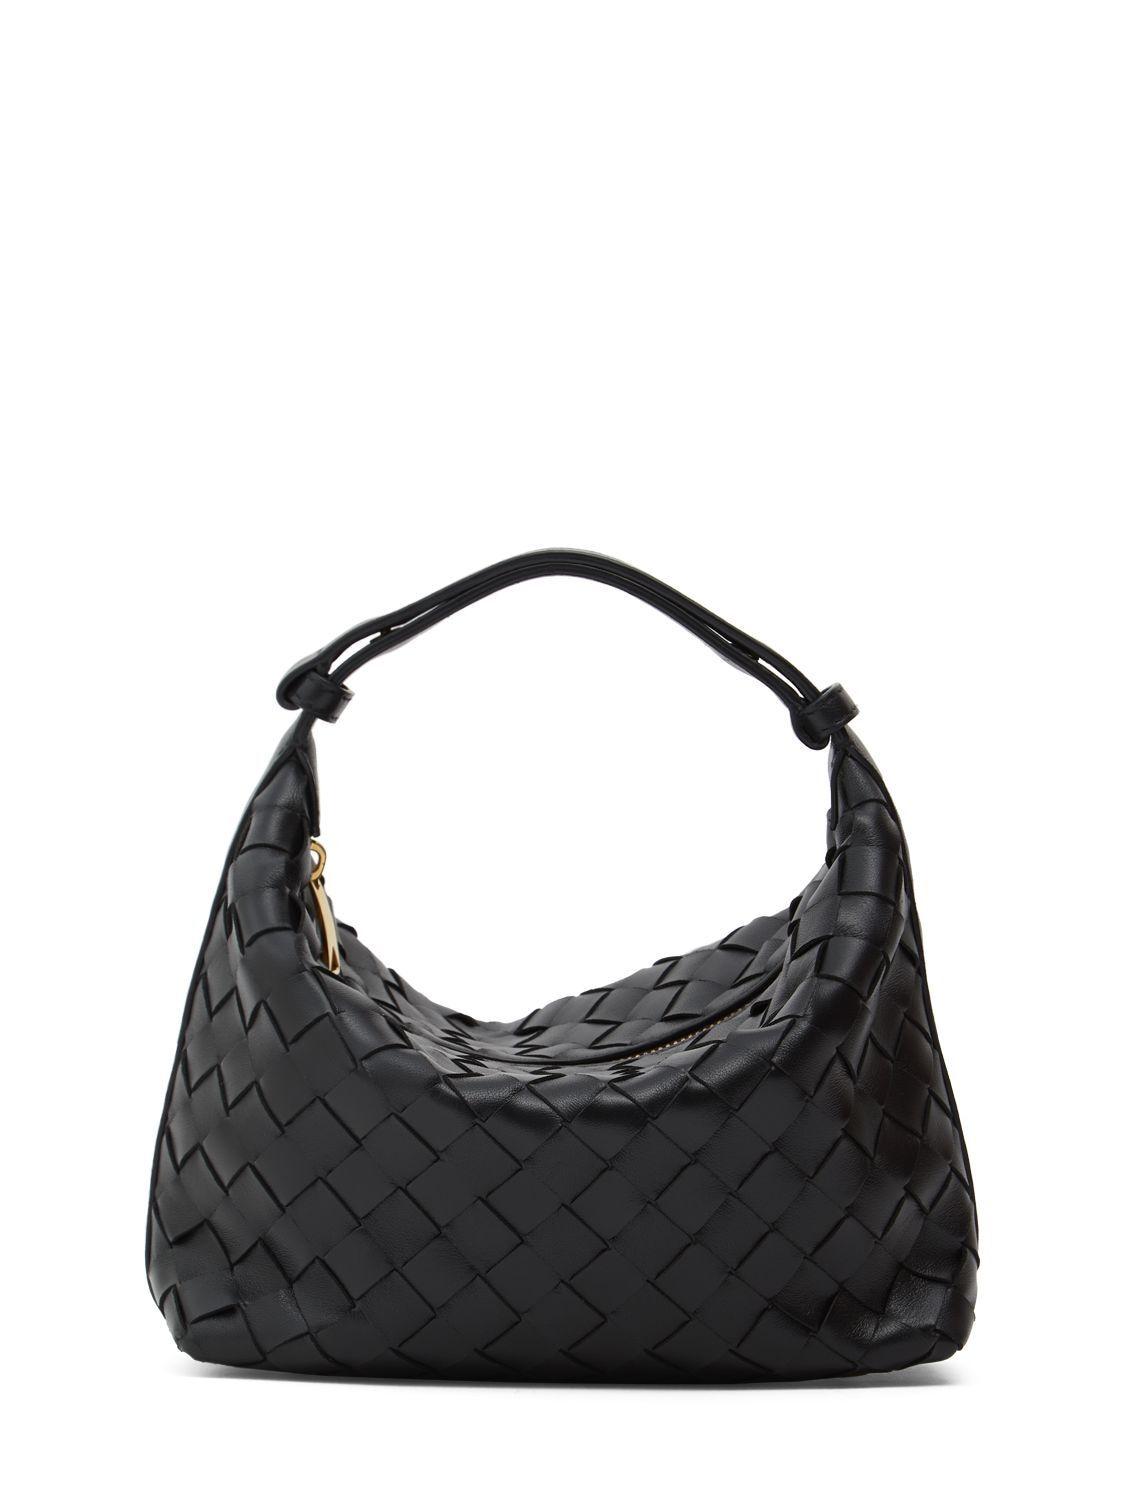 Bottega Veneta Mini Wallace Leather Shoulder Bag in Black | Lyst